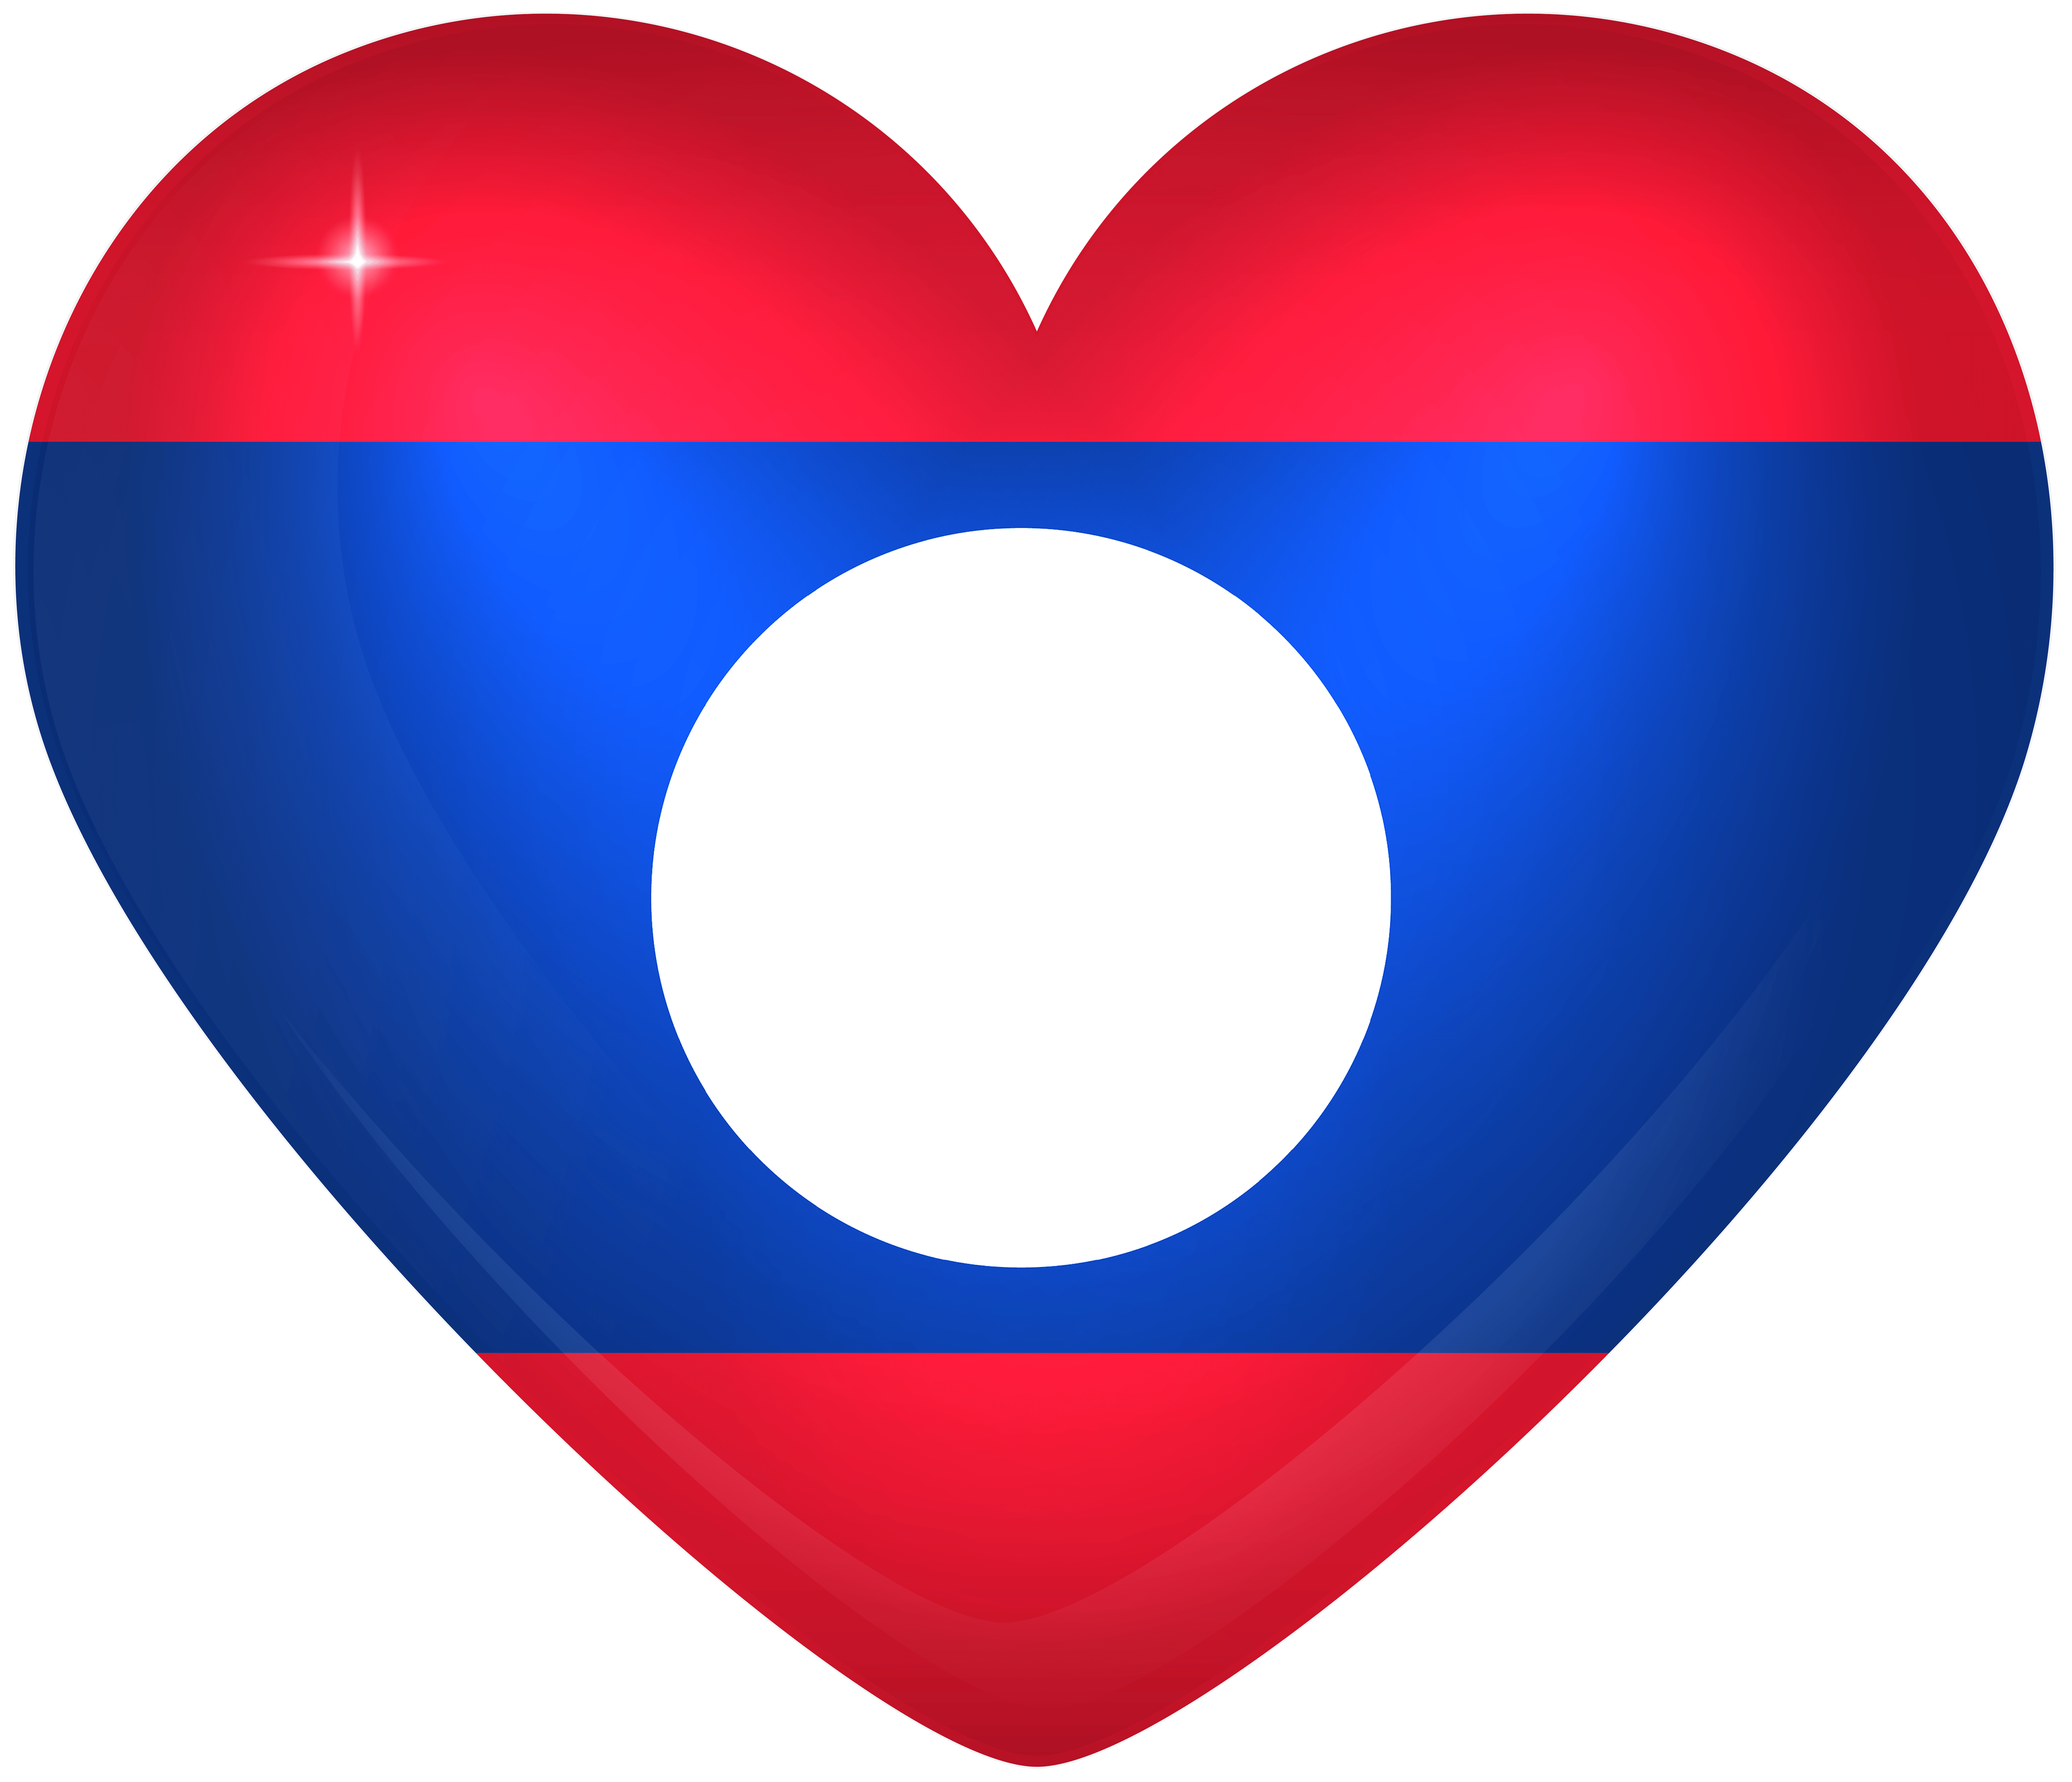 Laos Large Heart Flag Quality Image